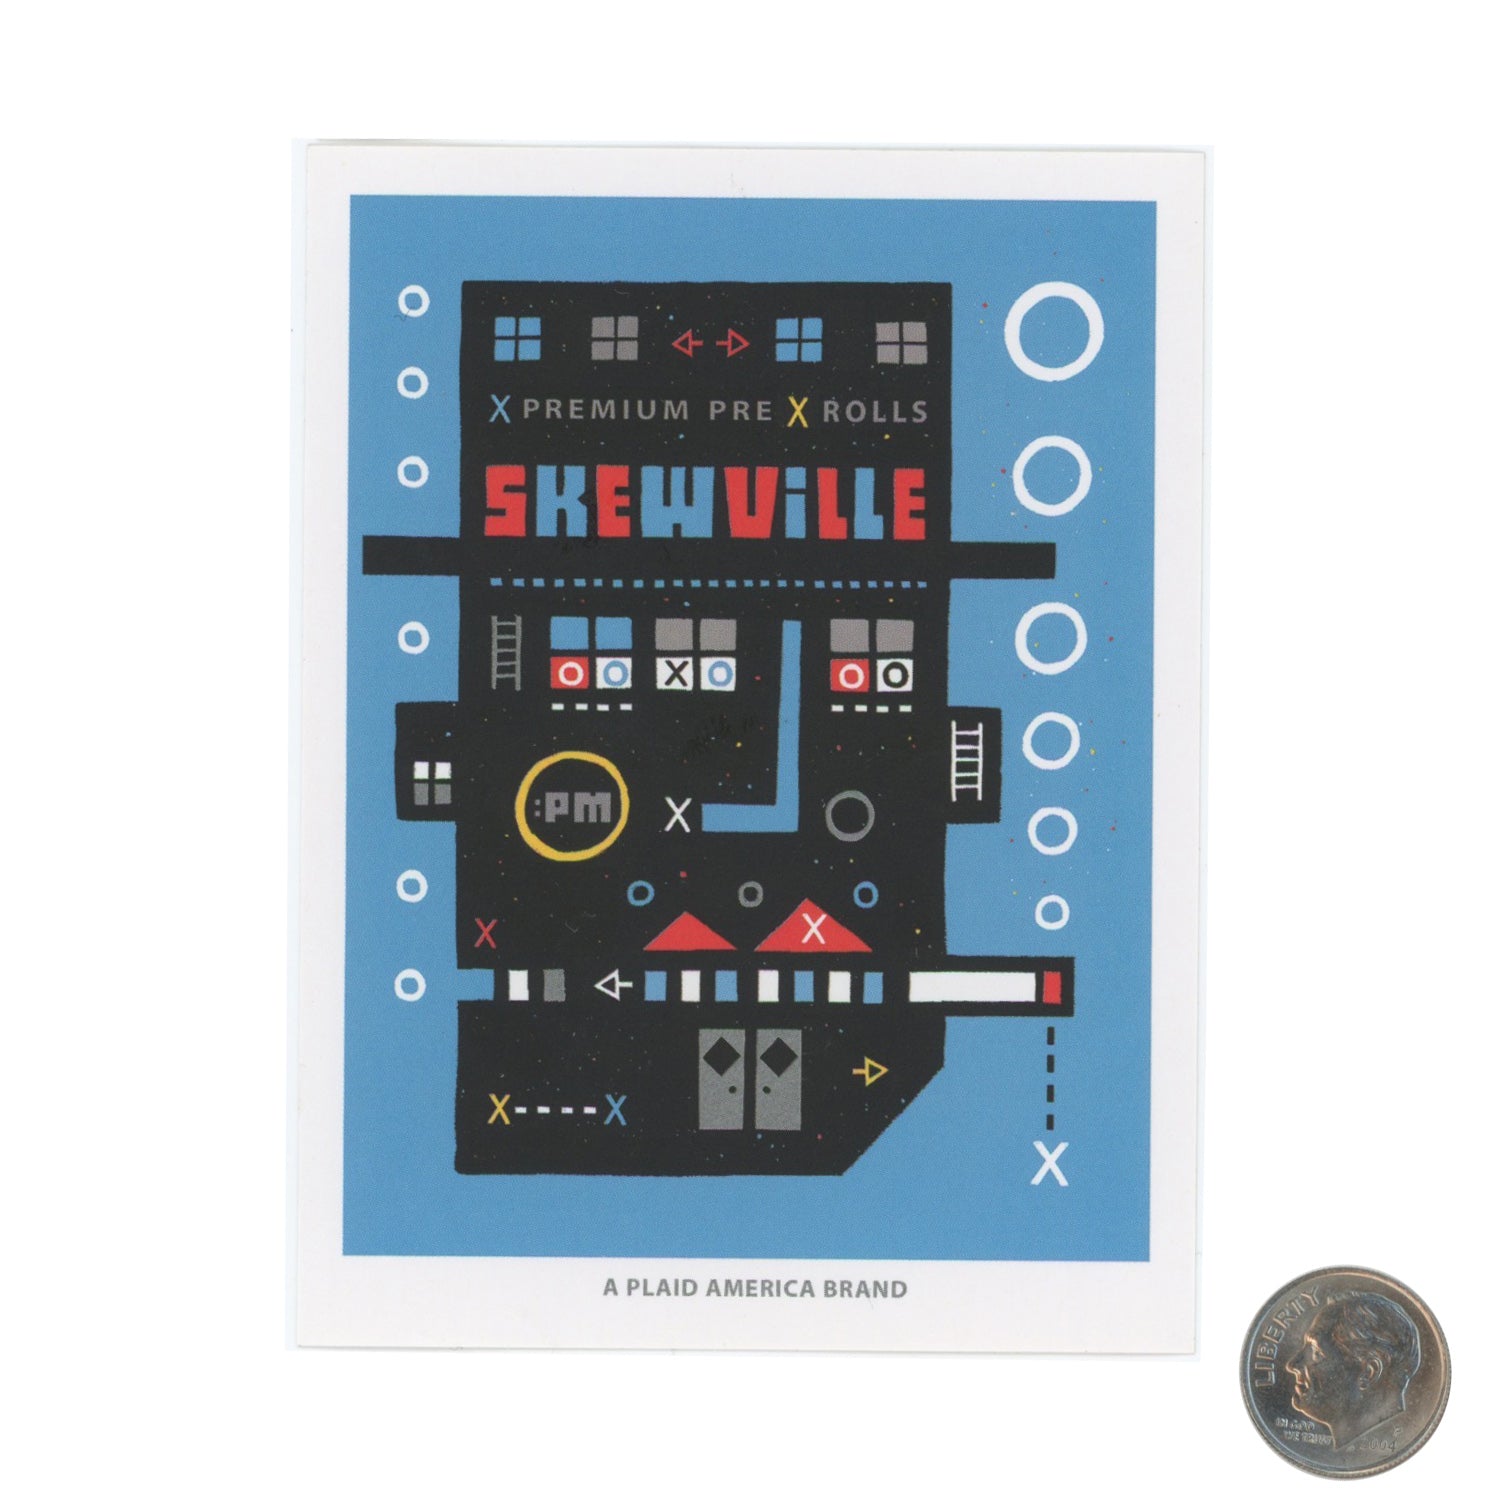 SKEWVILLE PREMIUM PRE-ROLL BLUE Sticker with dime